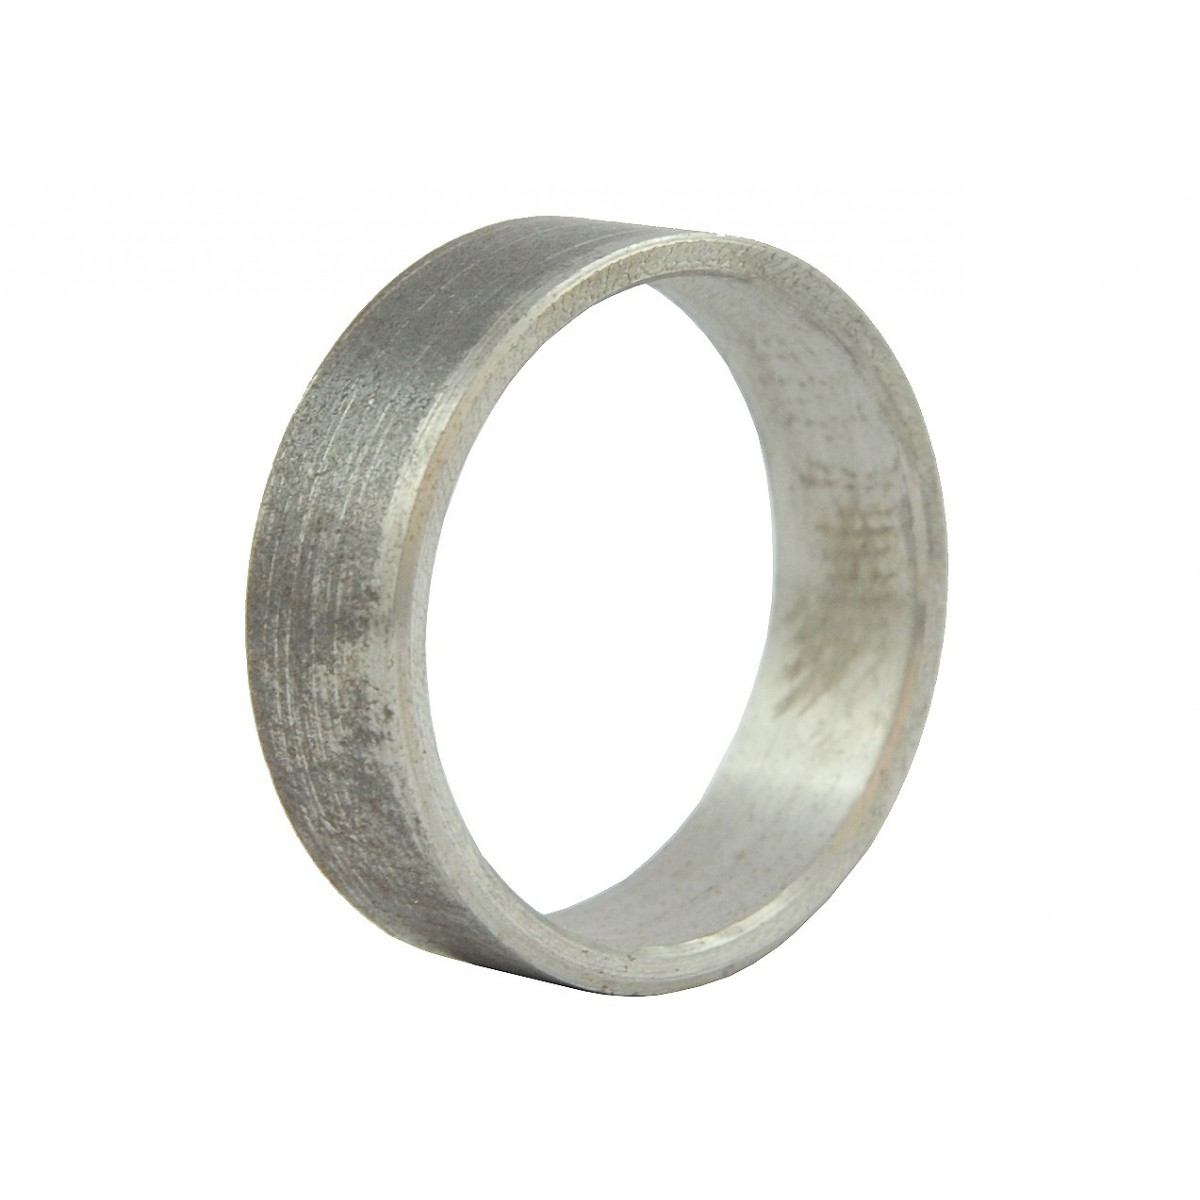 Sleeve bushing 35x40x12 mm ring